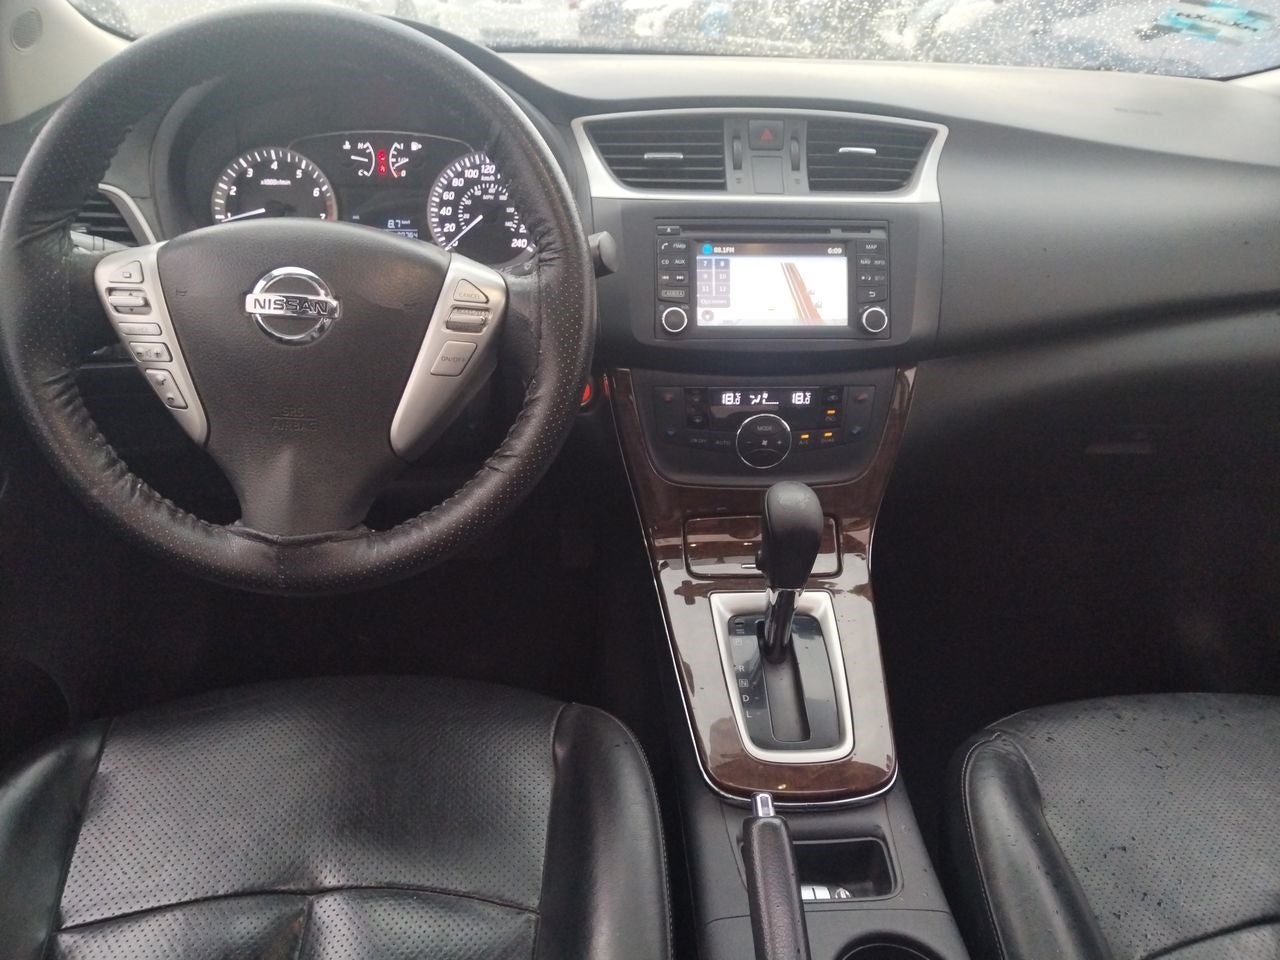 2016 Nissan SENTRA 4 PTS EXCLUSIVE CVT AAC AUT PIEL QC VOLANTEPIEL F NIEBLA RA-17